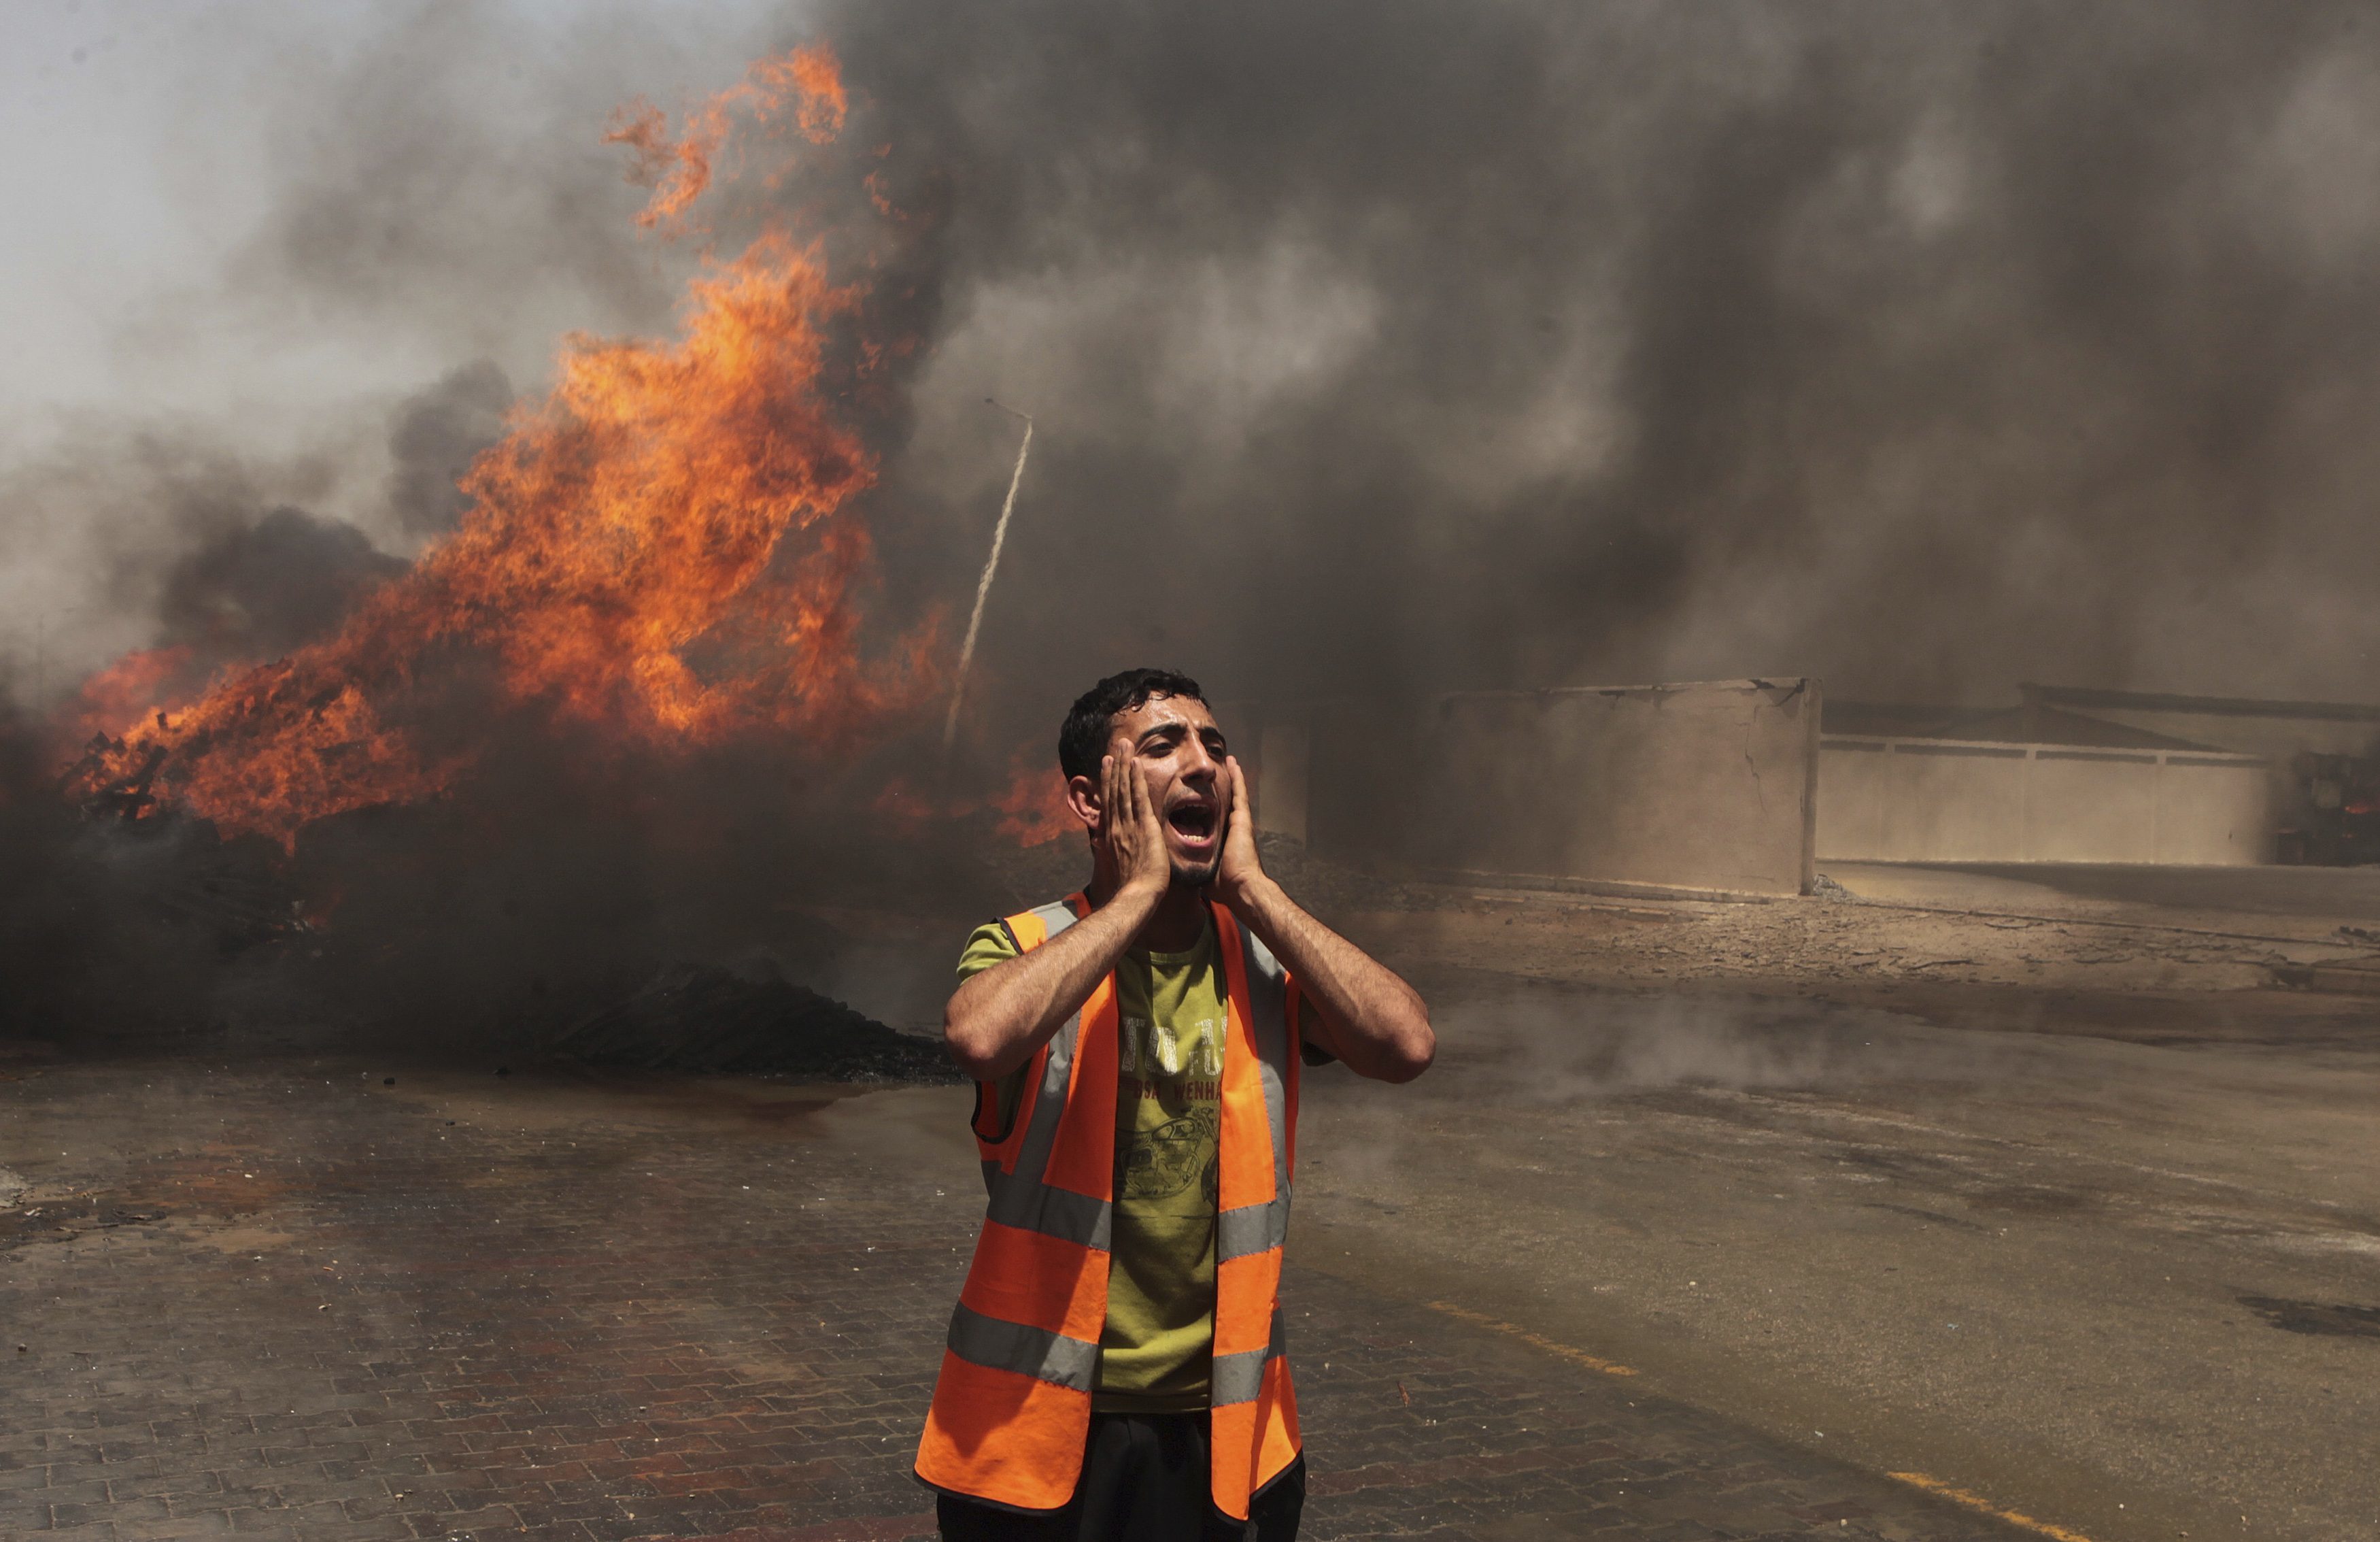 Video ντοκουμέντο: Η στιγμή που ανατινάζεται σπίτι Παλαιστινίων – “Ζεσταίνει” την πολεμική μηχανή το Ισραήλ – Έρημη πόλη η Γάζα